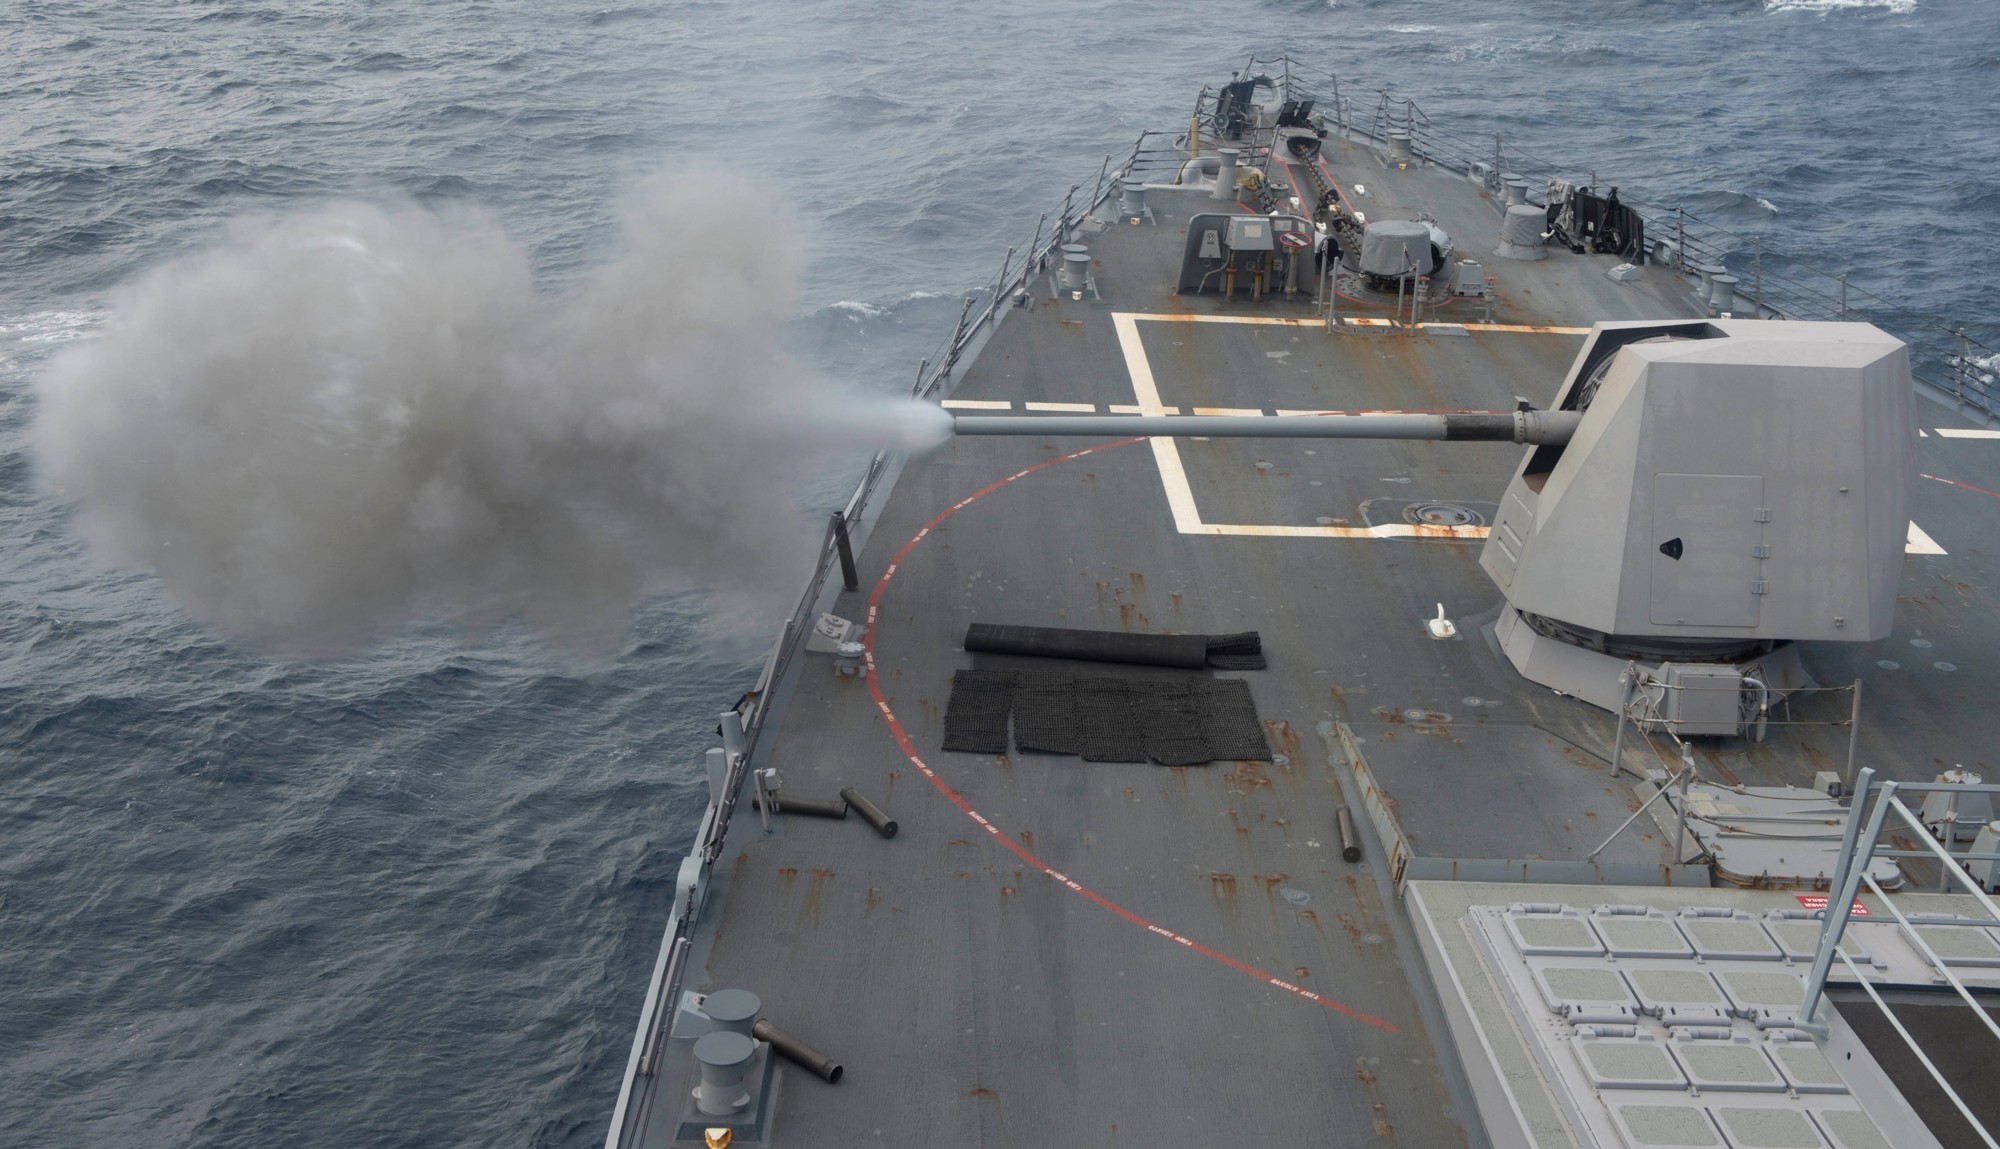 ddg-107 uss gravely arleigh burke class guided missile destroyer aegis us navy mk.45 gun fire 06p